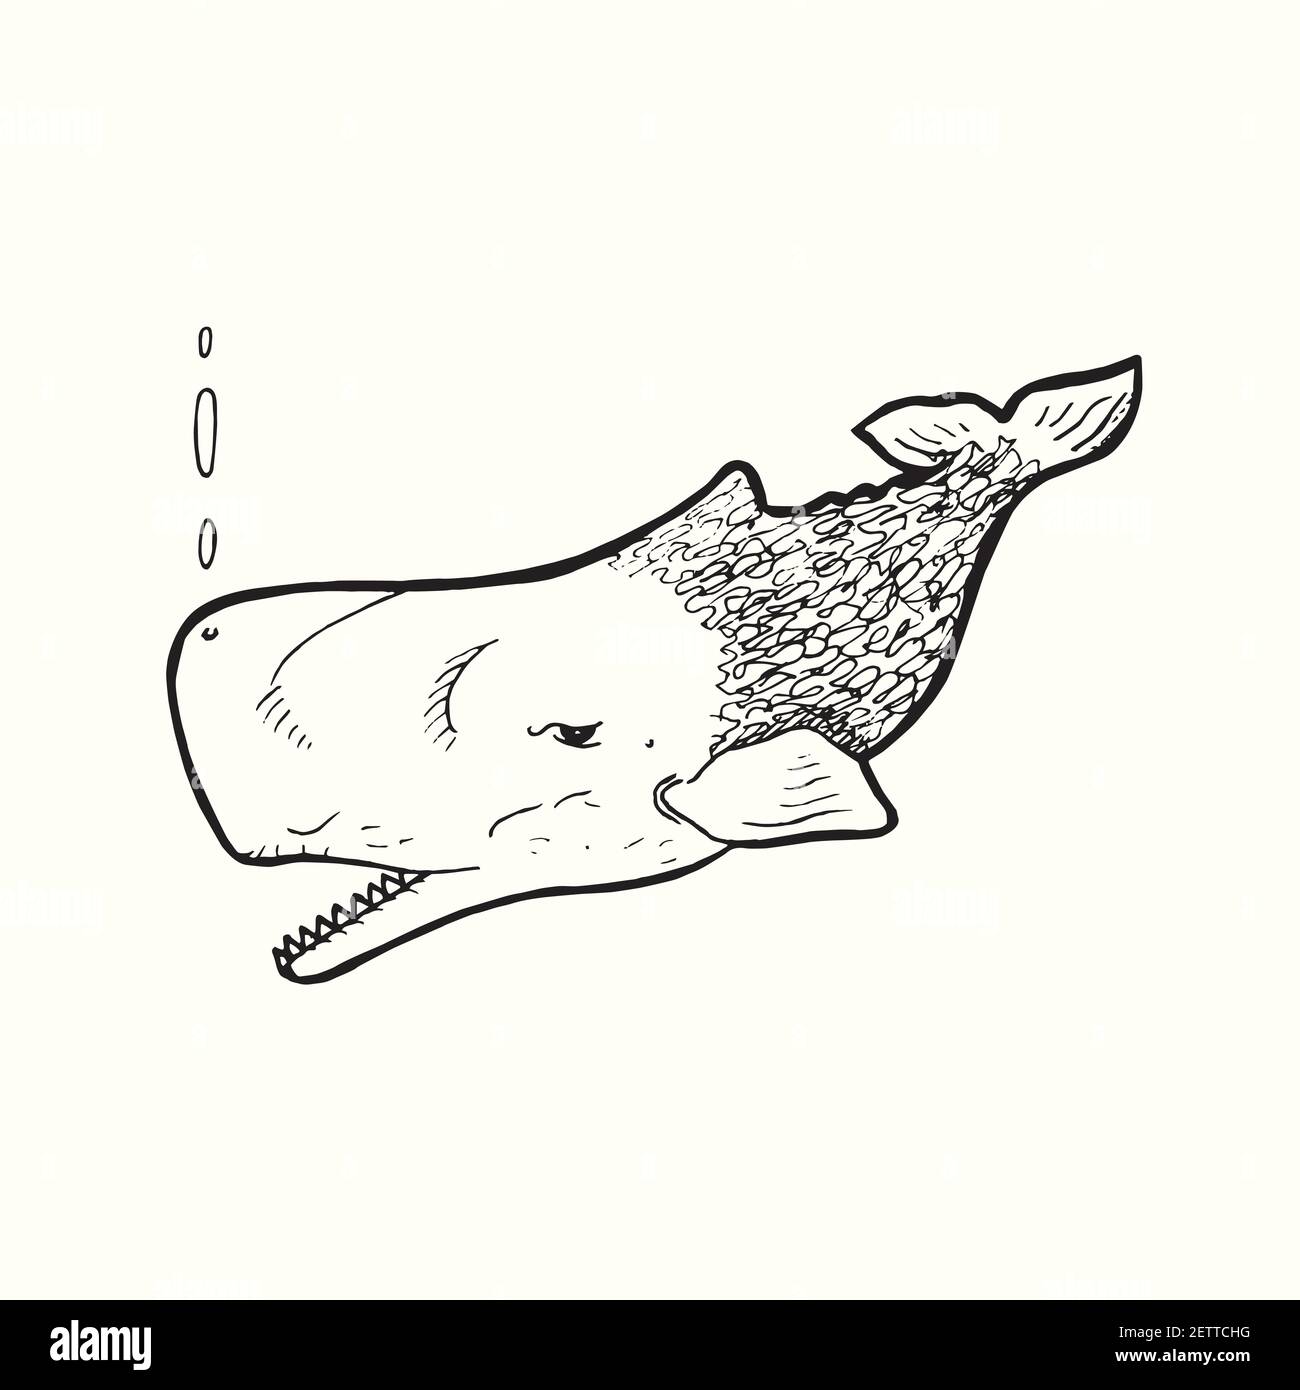 Blue Whale, hand drawn doodle gravure vintage style, sketch, outline illustration Stock Photo